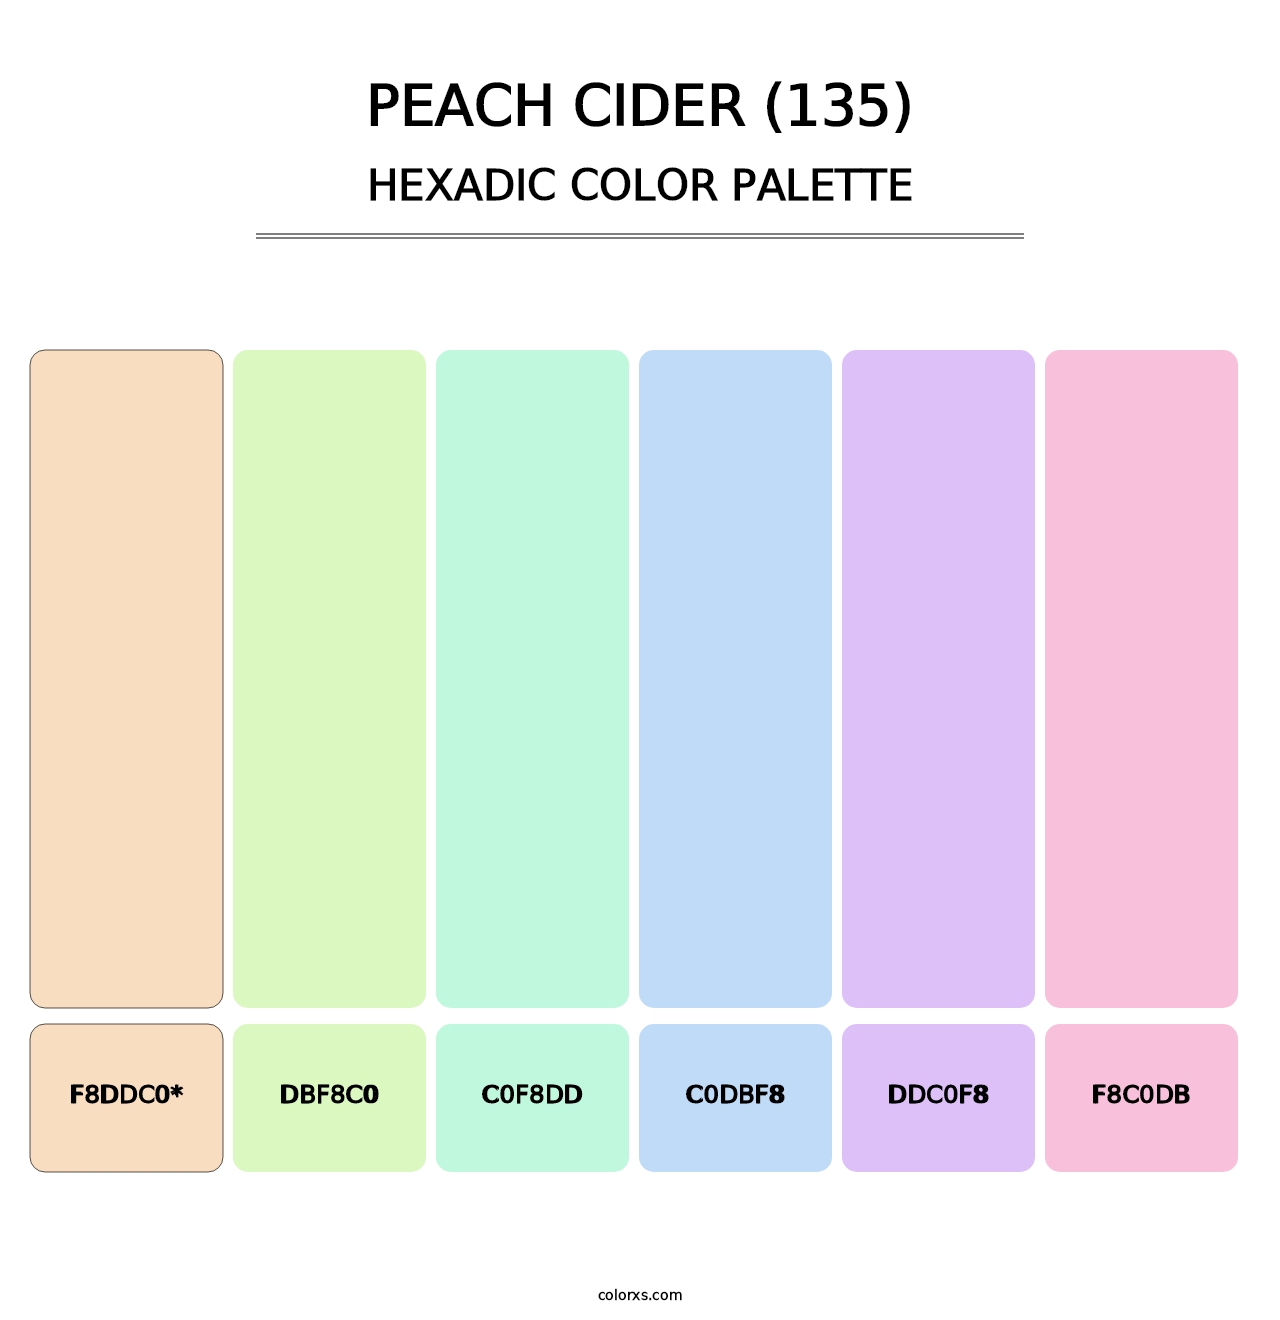 Peach Cider (135) - Hexadic Color Palette